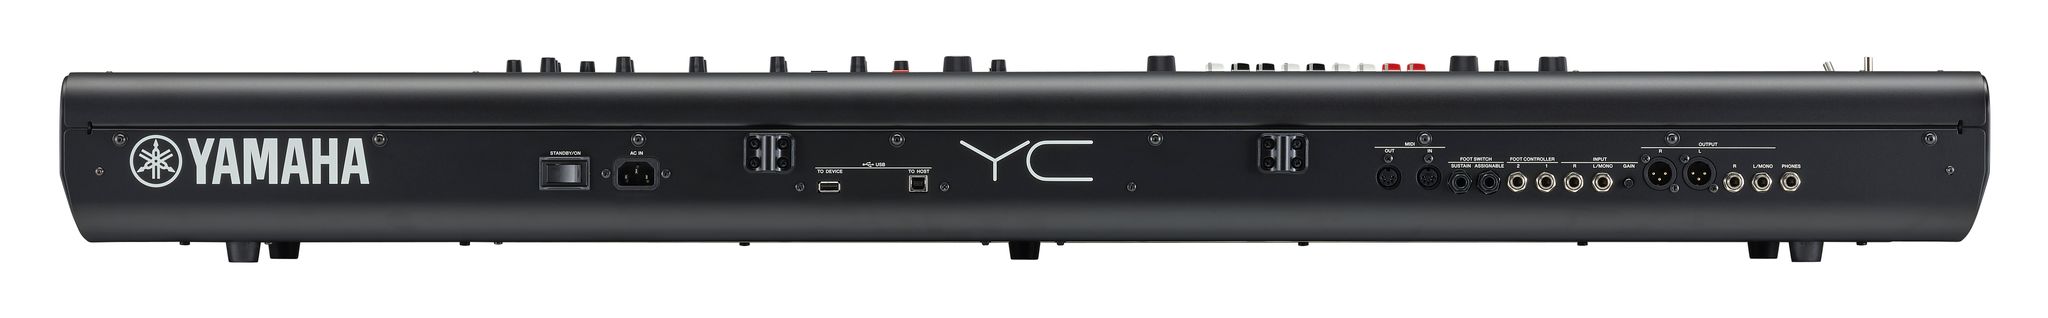 Yamaha Yc 88 - Stagepiano - Variation 2